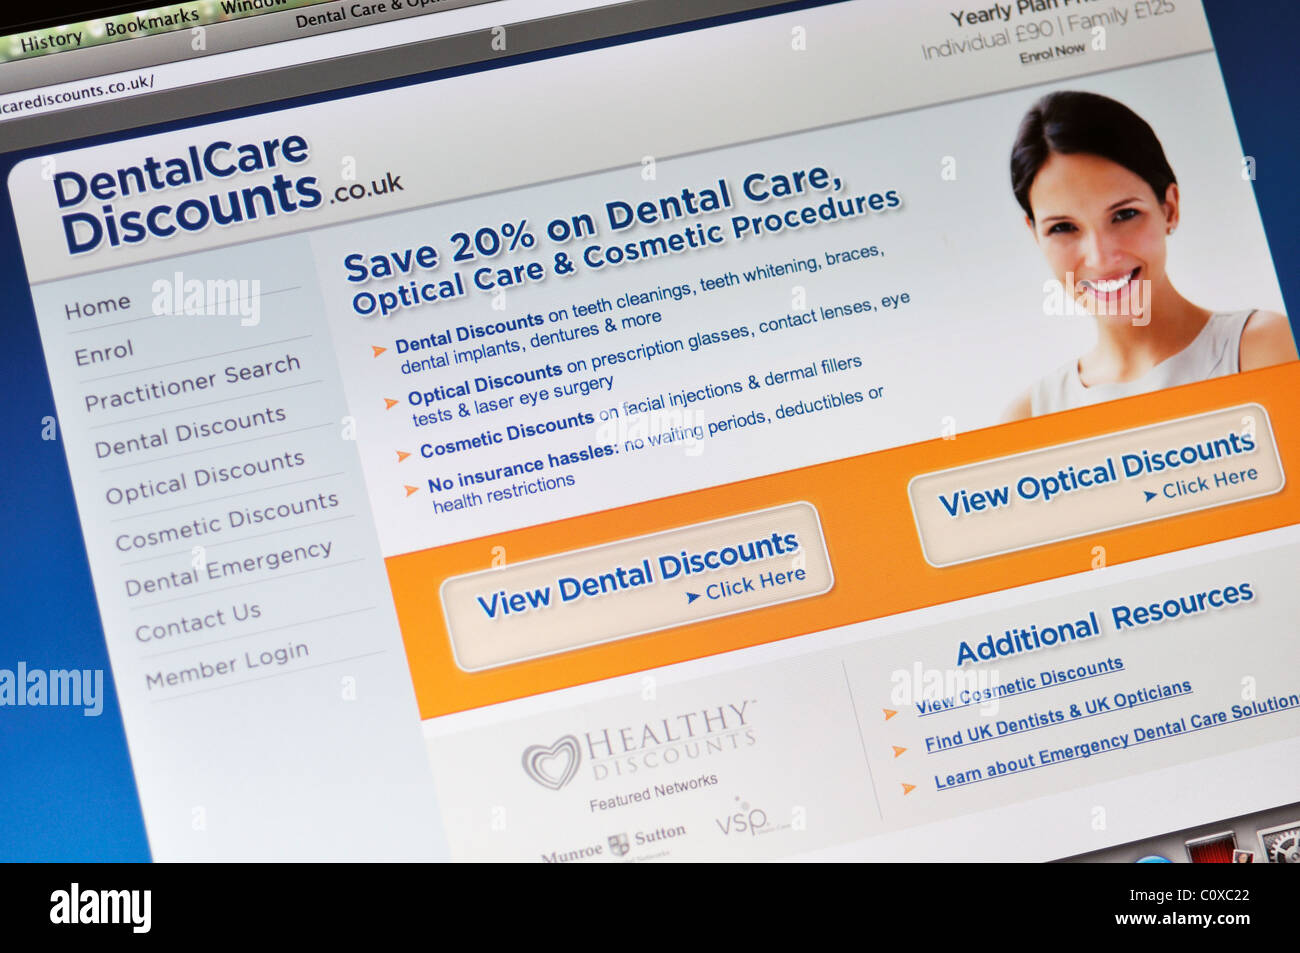 Dental Care Discounts insurance website Stock Photo